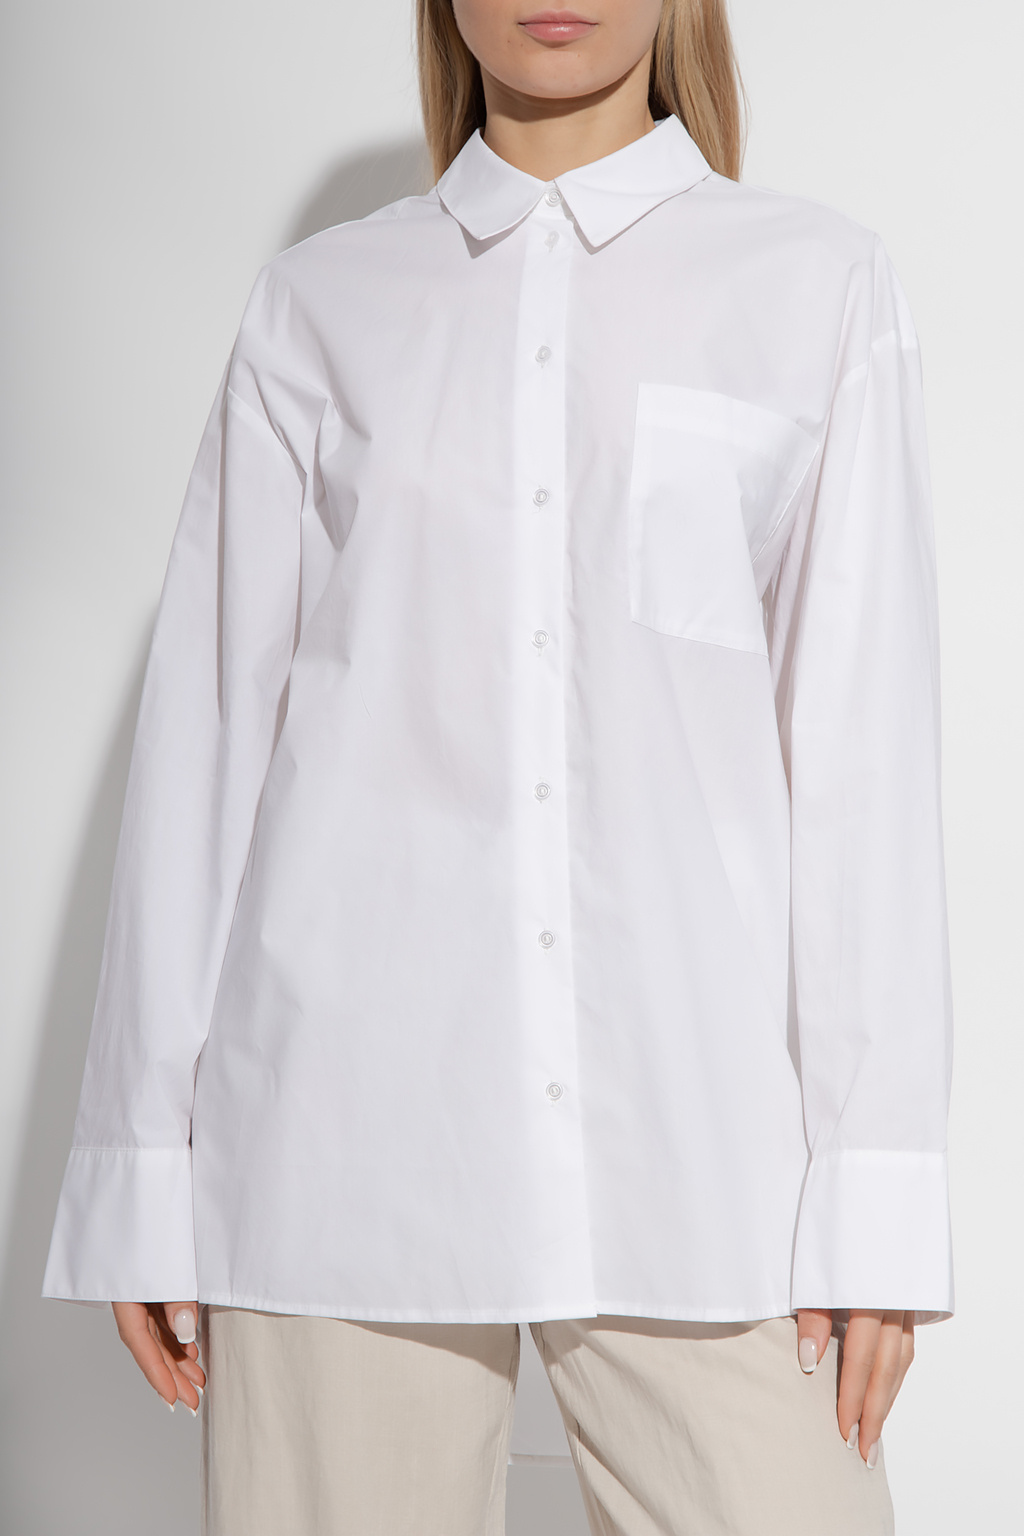 HERSKIND ‘Henriette’ cotton sidan shirt